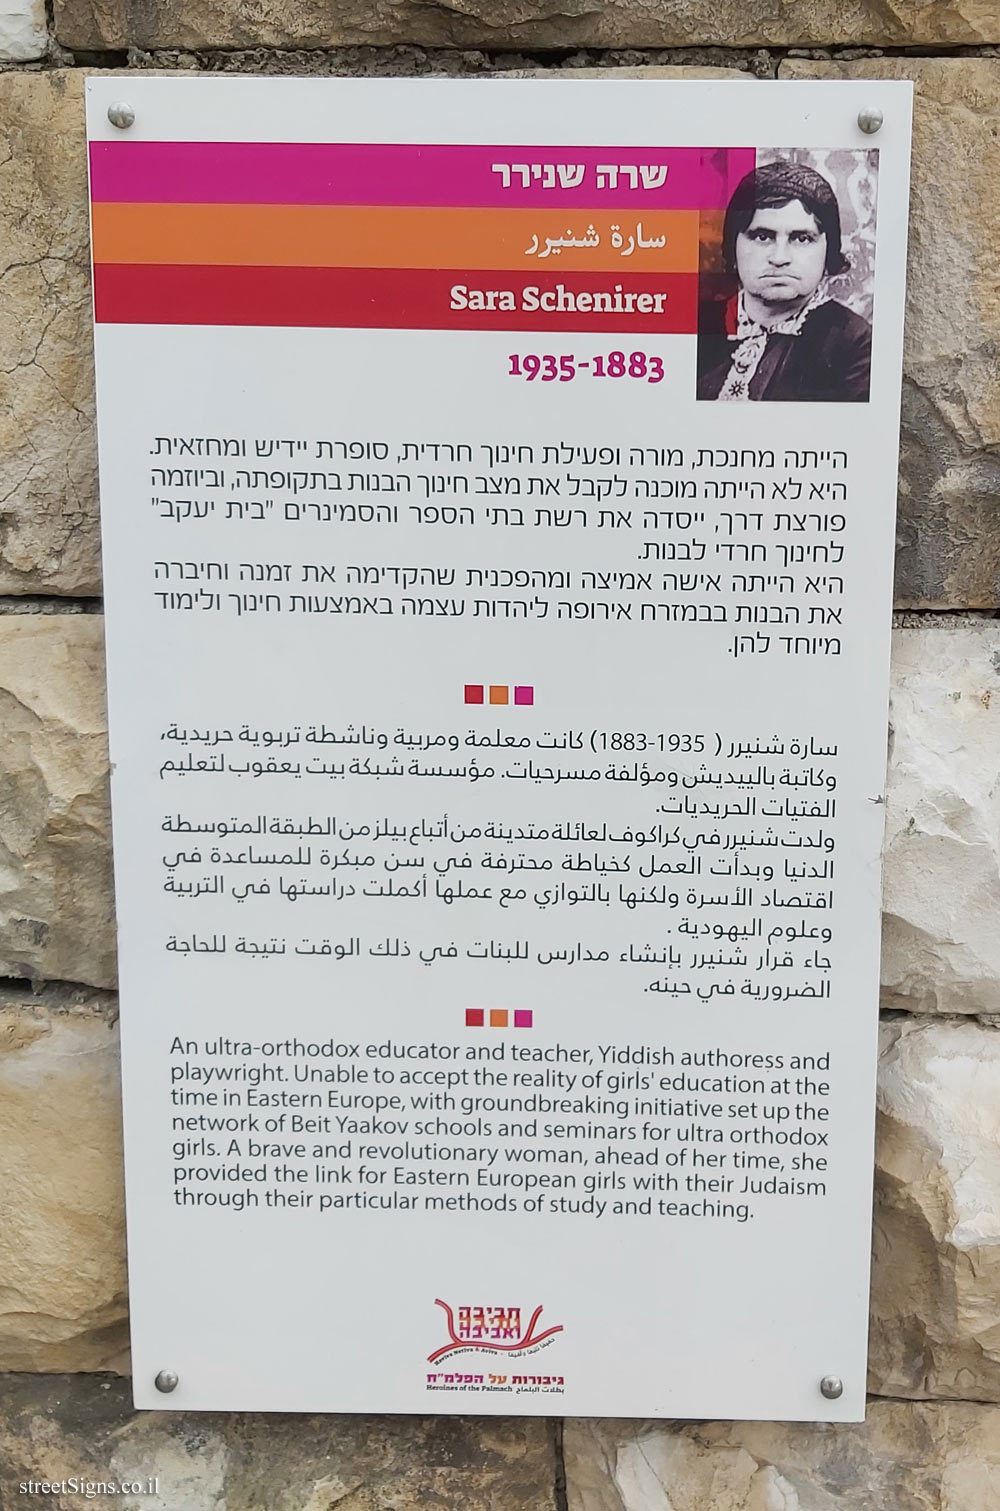 Jerusalem - "Haviva Netiva and Aviva" route - Sara Schenirer